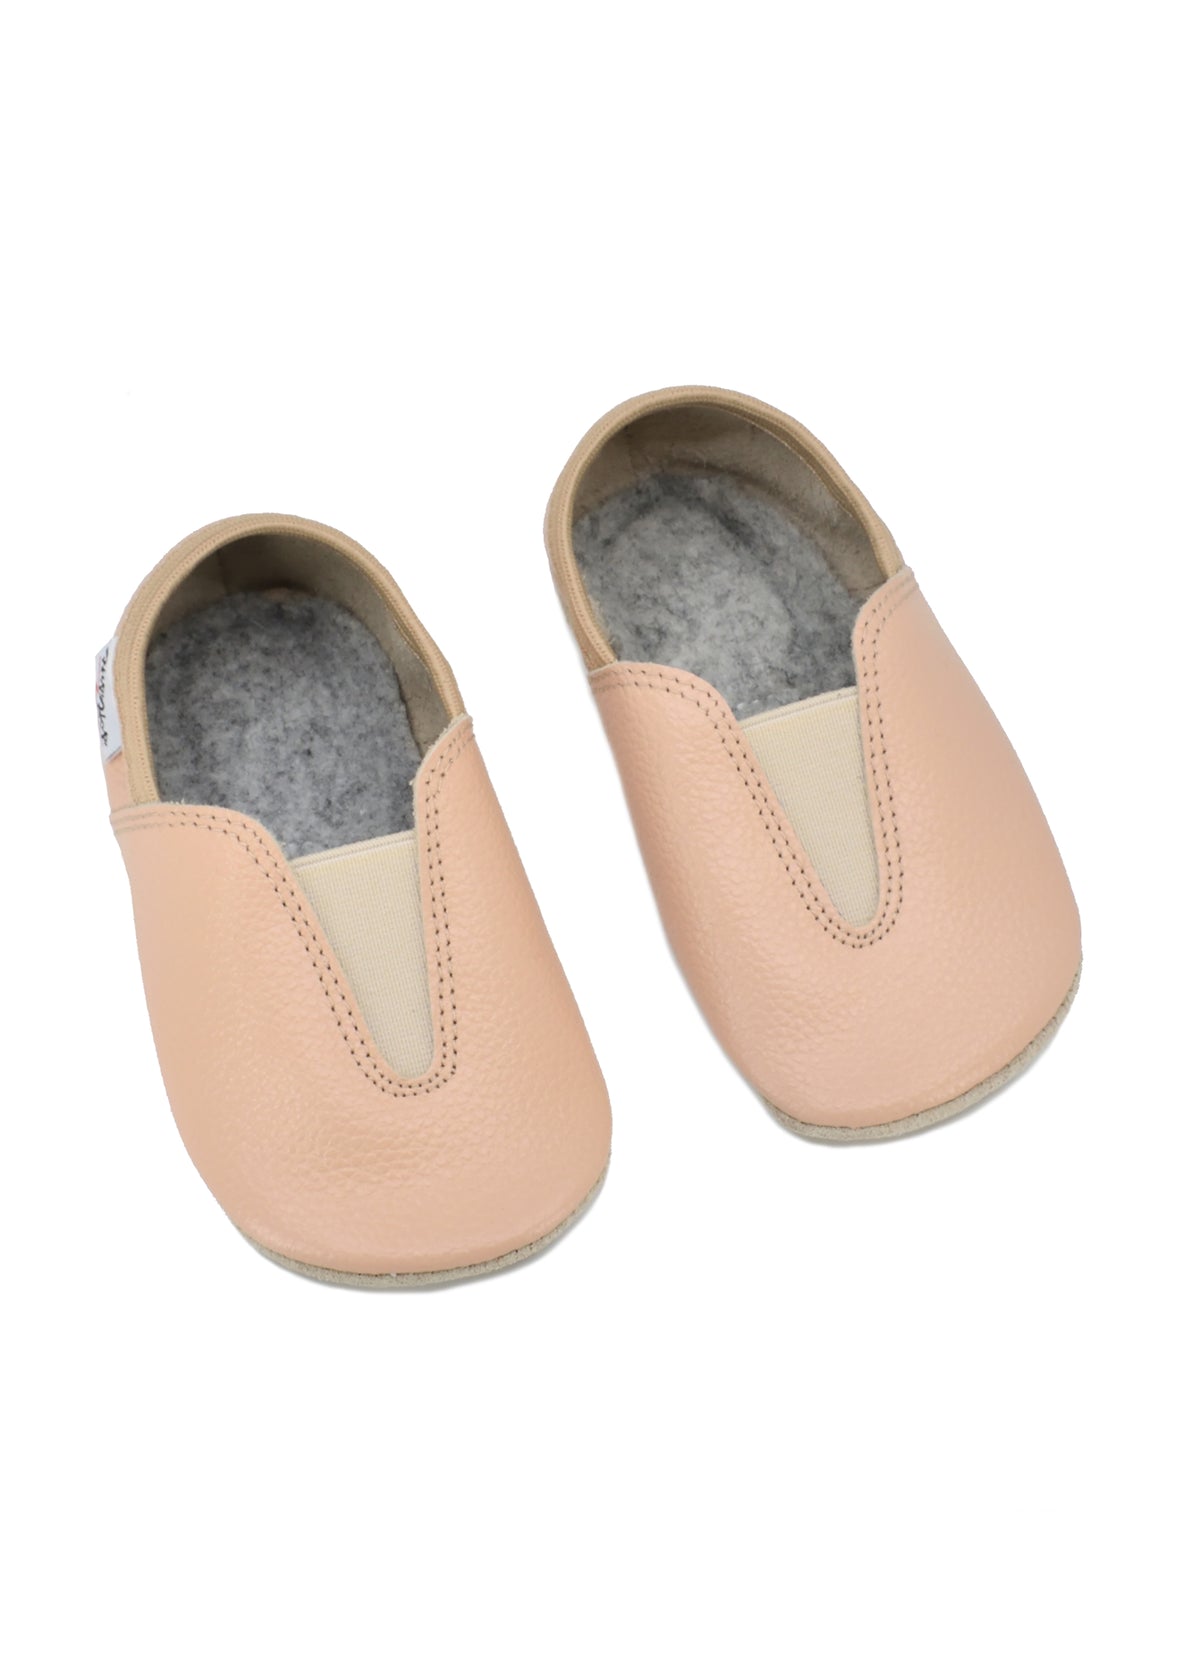 Children's Hip-Hop Barefoot leather slippers - beige